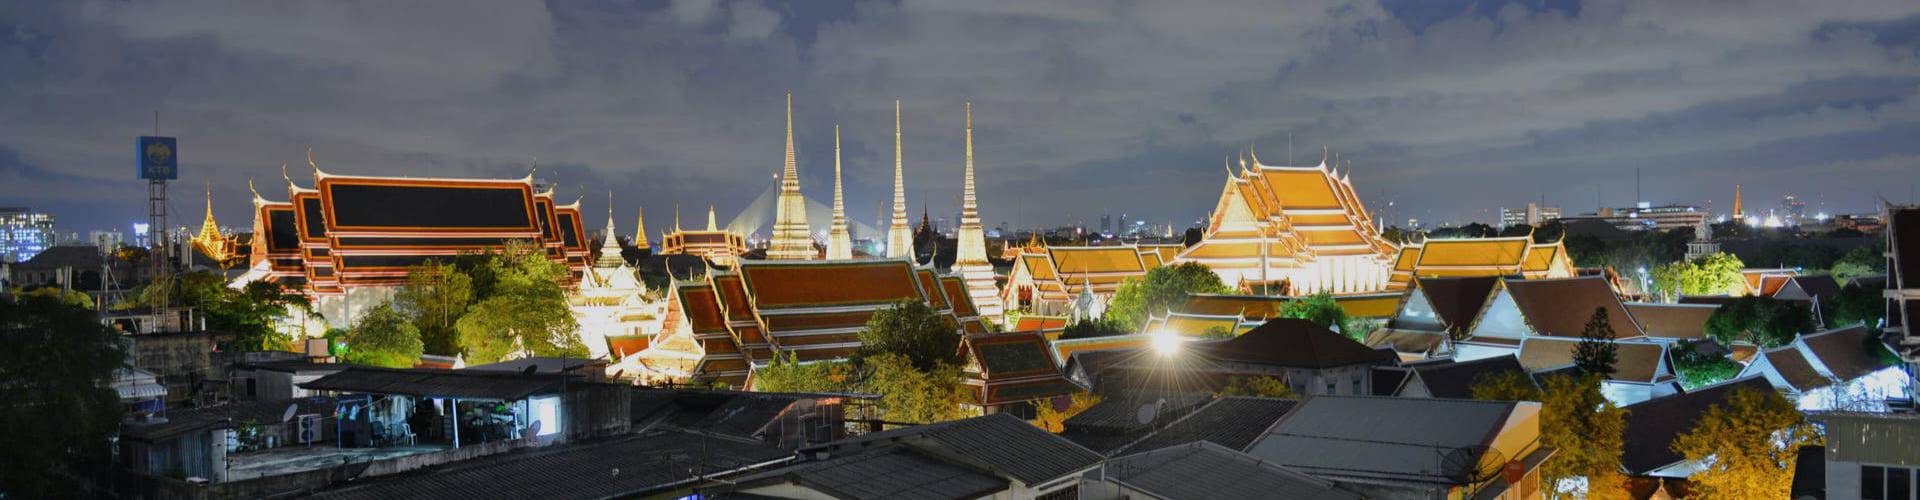 Riva Arun Bangkok - กรุงเทพมหานคร - 